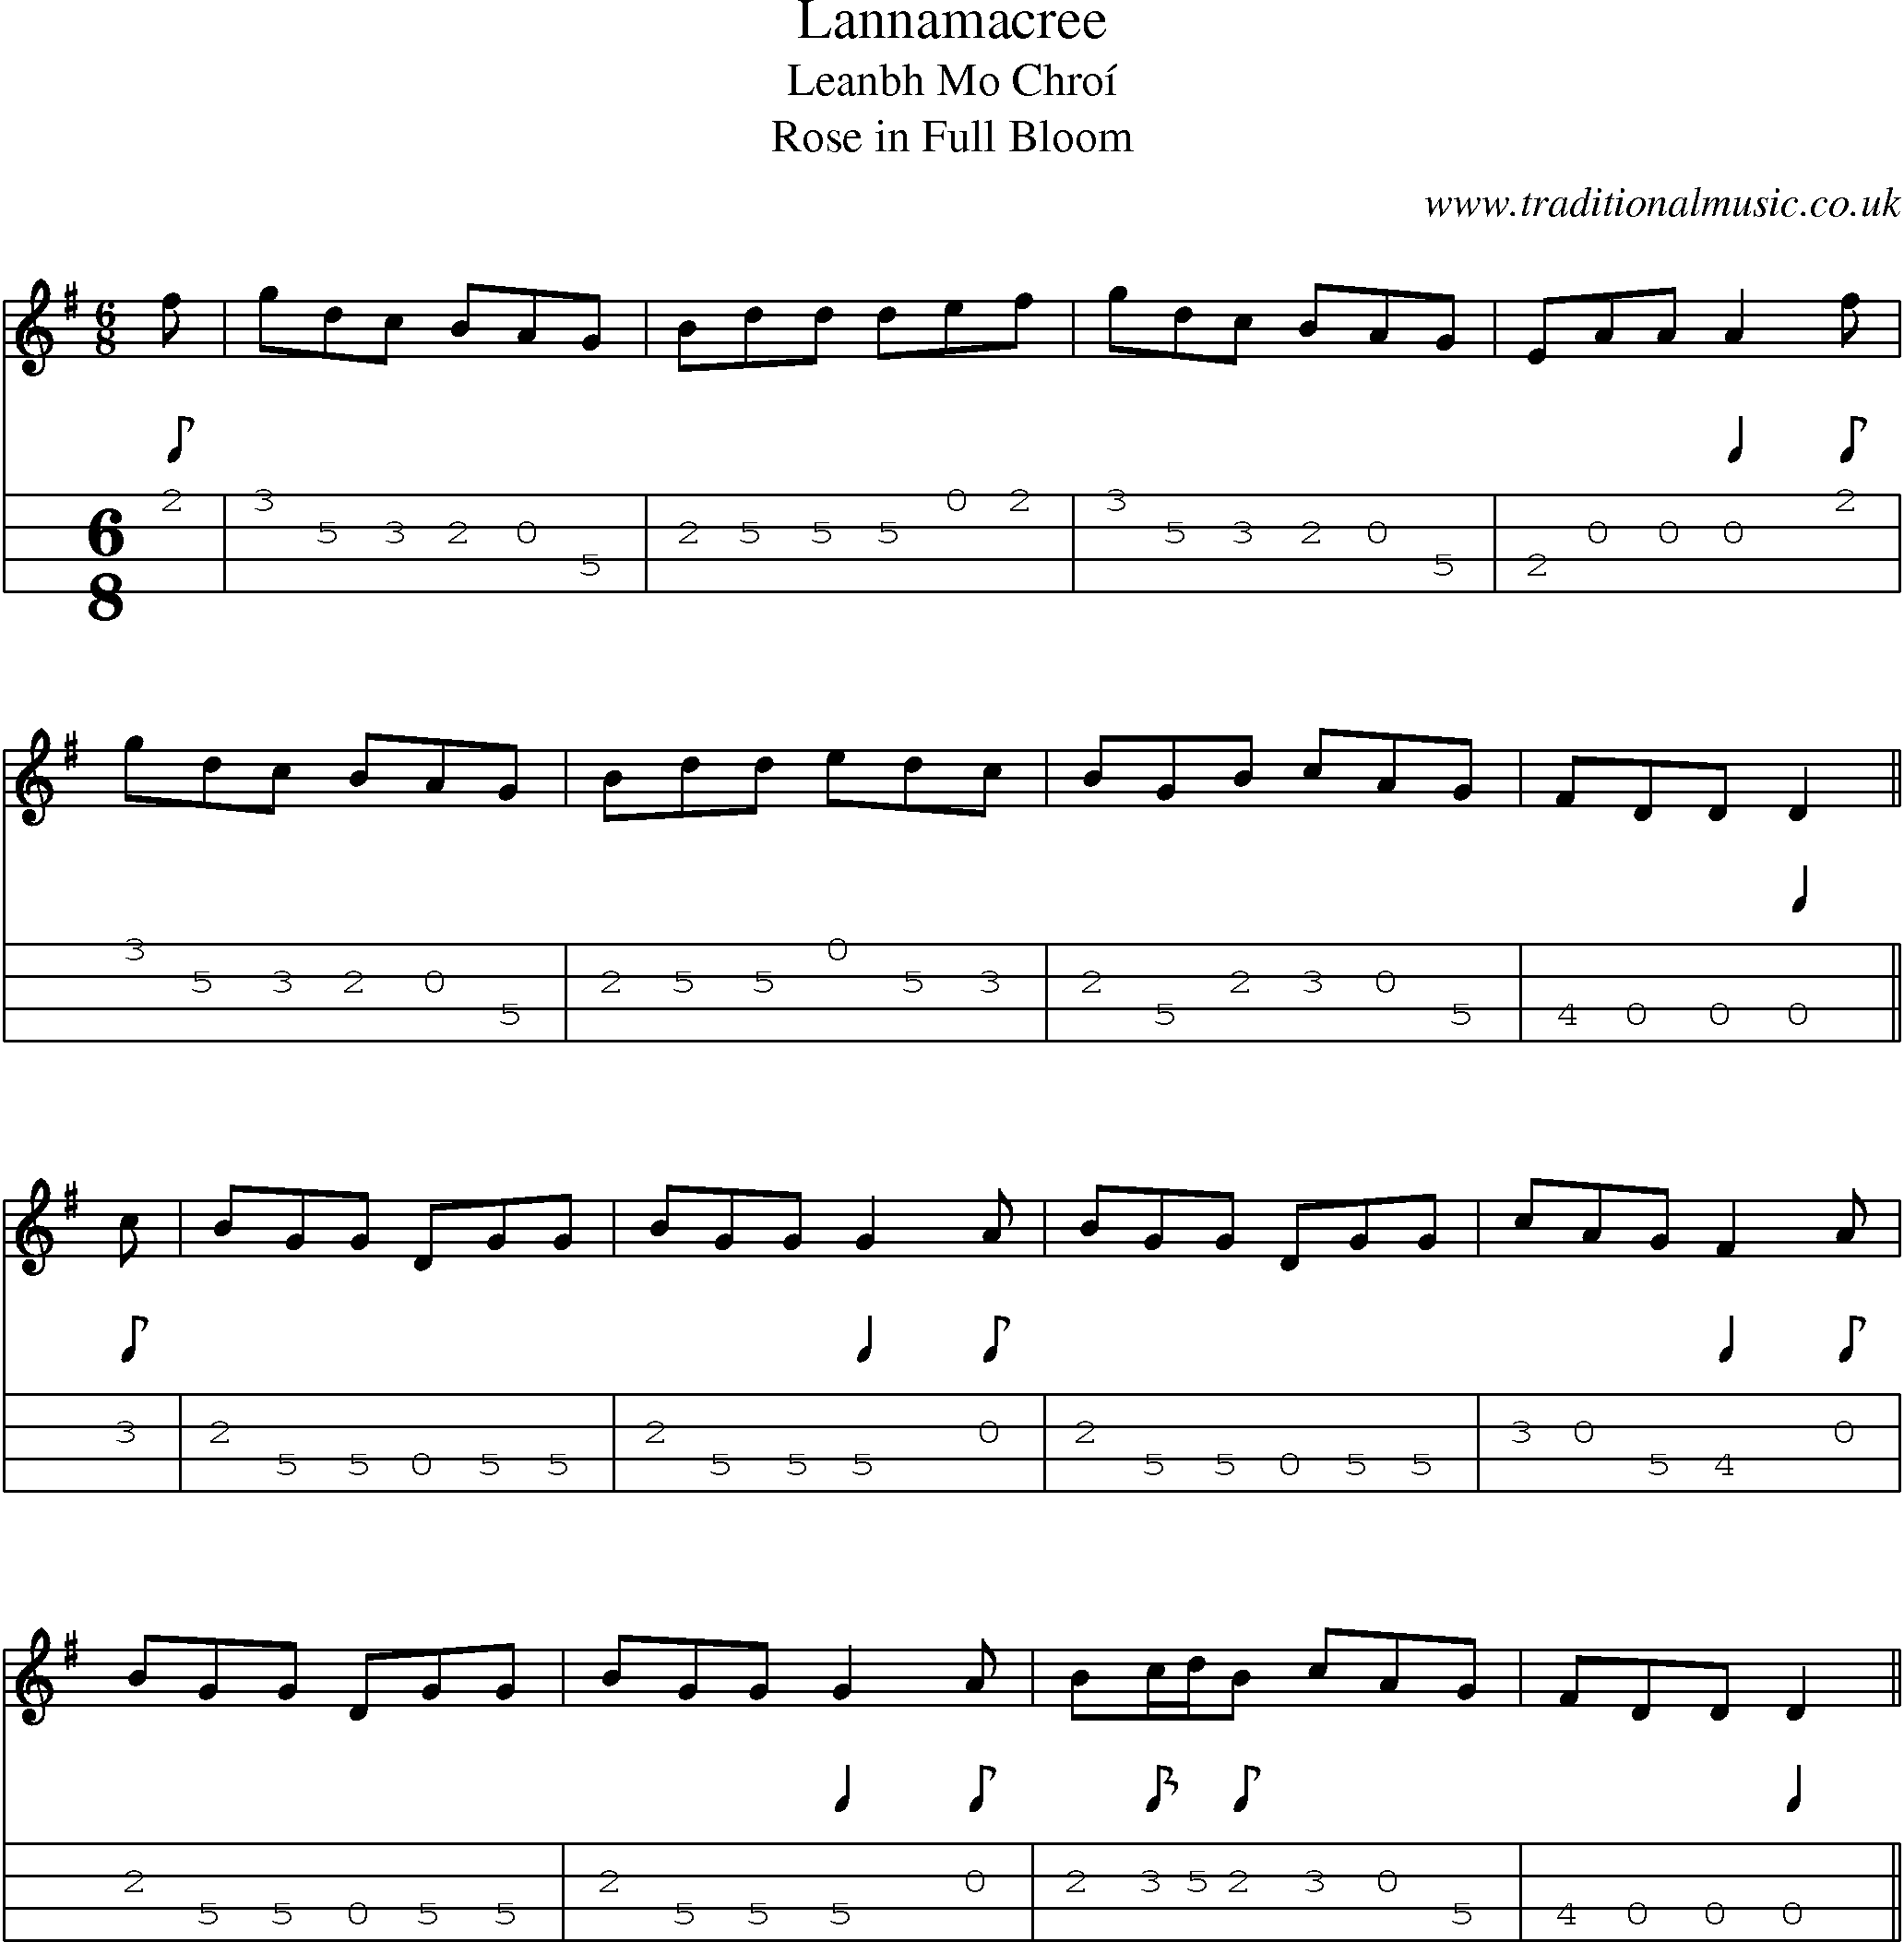 Music Score and Mandolin Tabs for Lannamacree